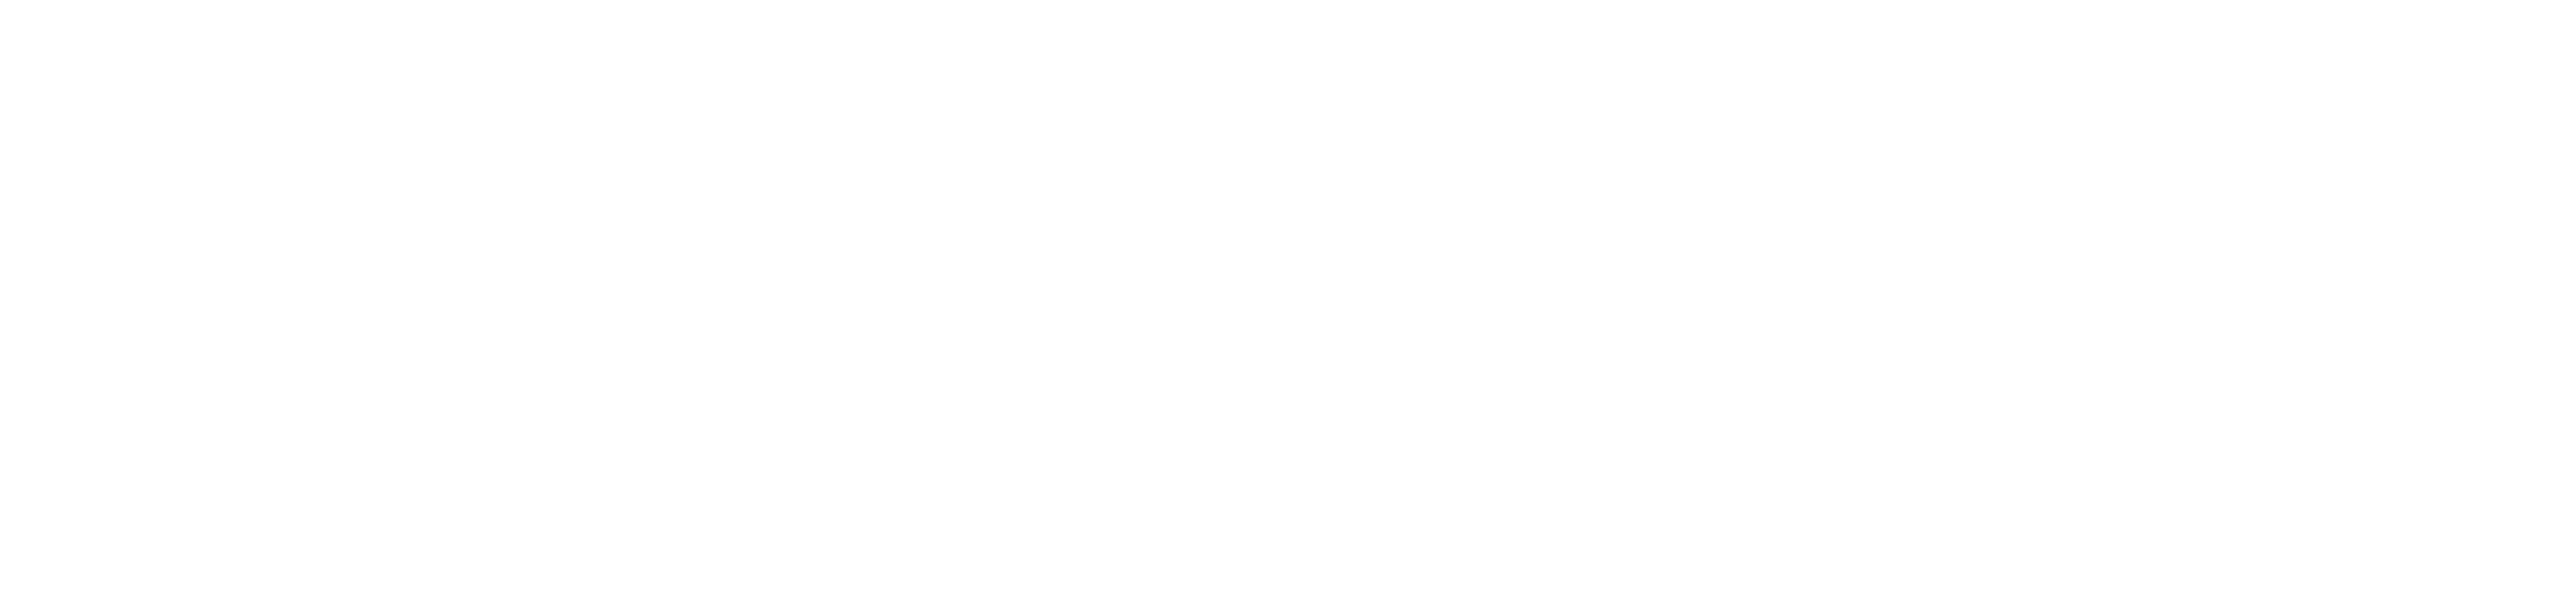 Sheffield mental health guide logo